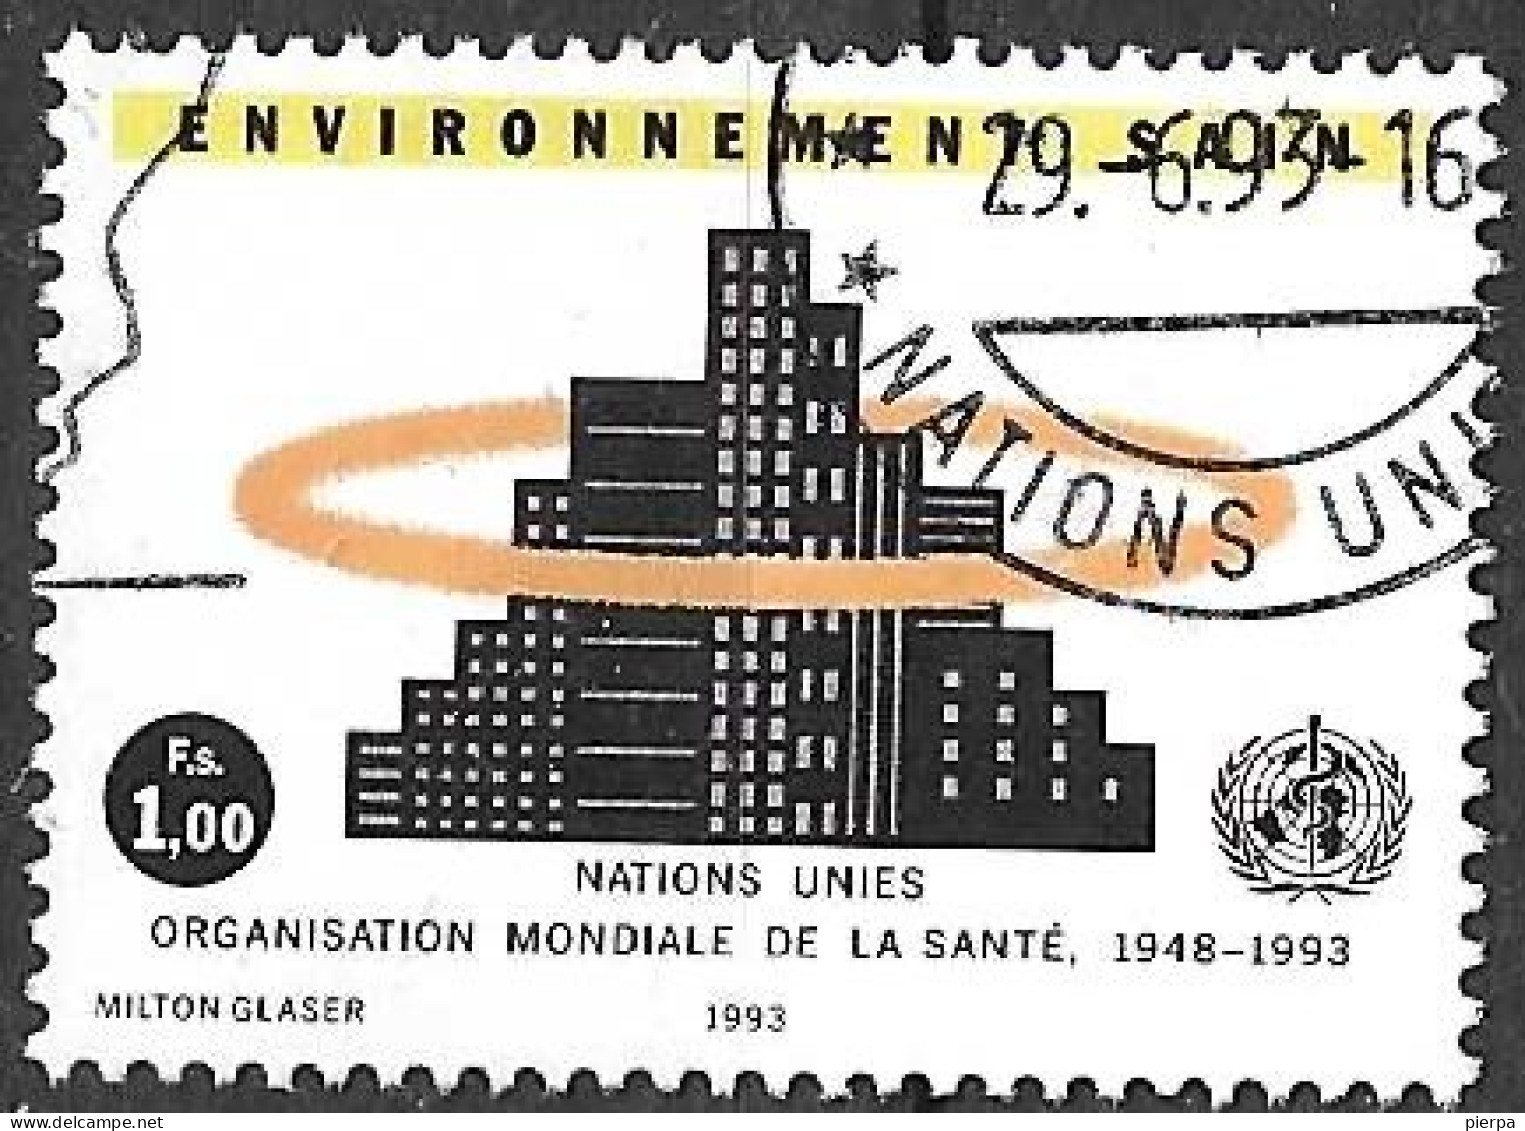 O.N.U. GENEVE - 1993 - PRO AMBIENTE - FR. 1,00 -  USATO (YVERT 234 - MICHEL 232) - Oblitérés